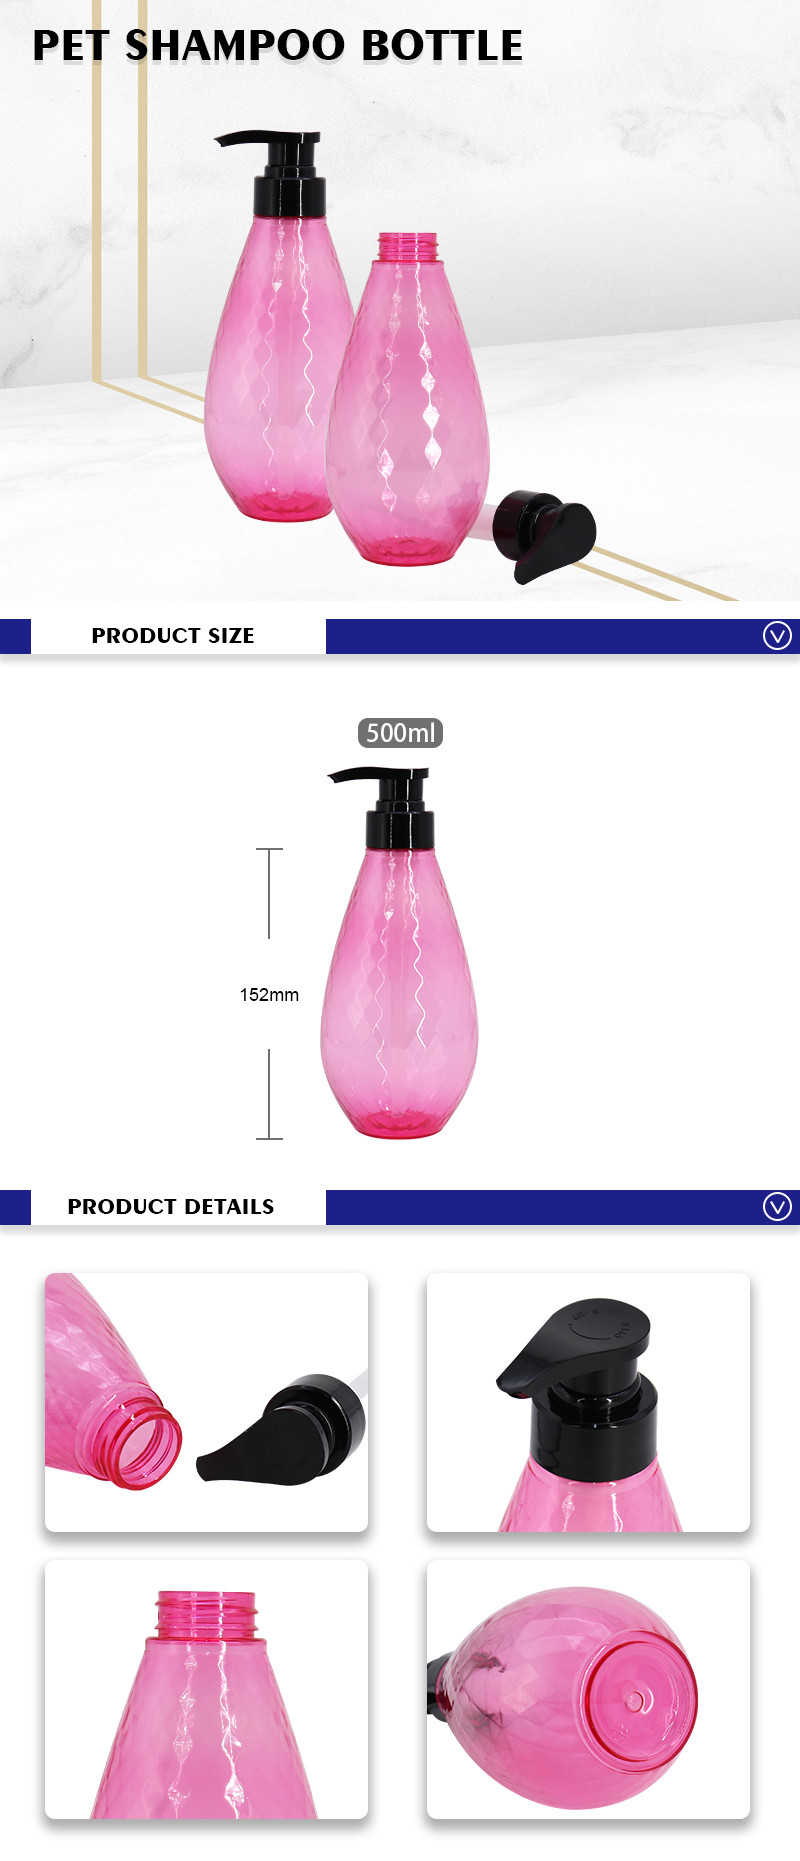 The Pink Color Shampoo Bottle 